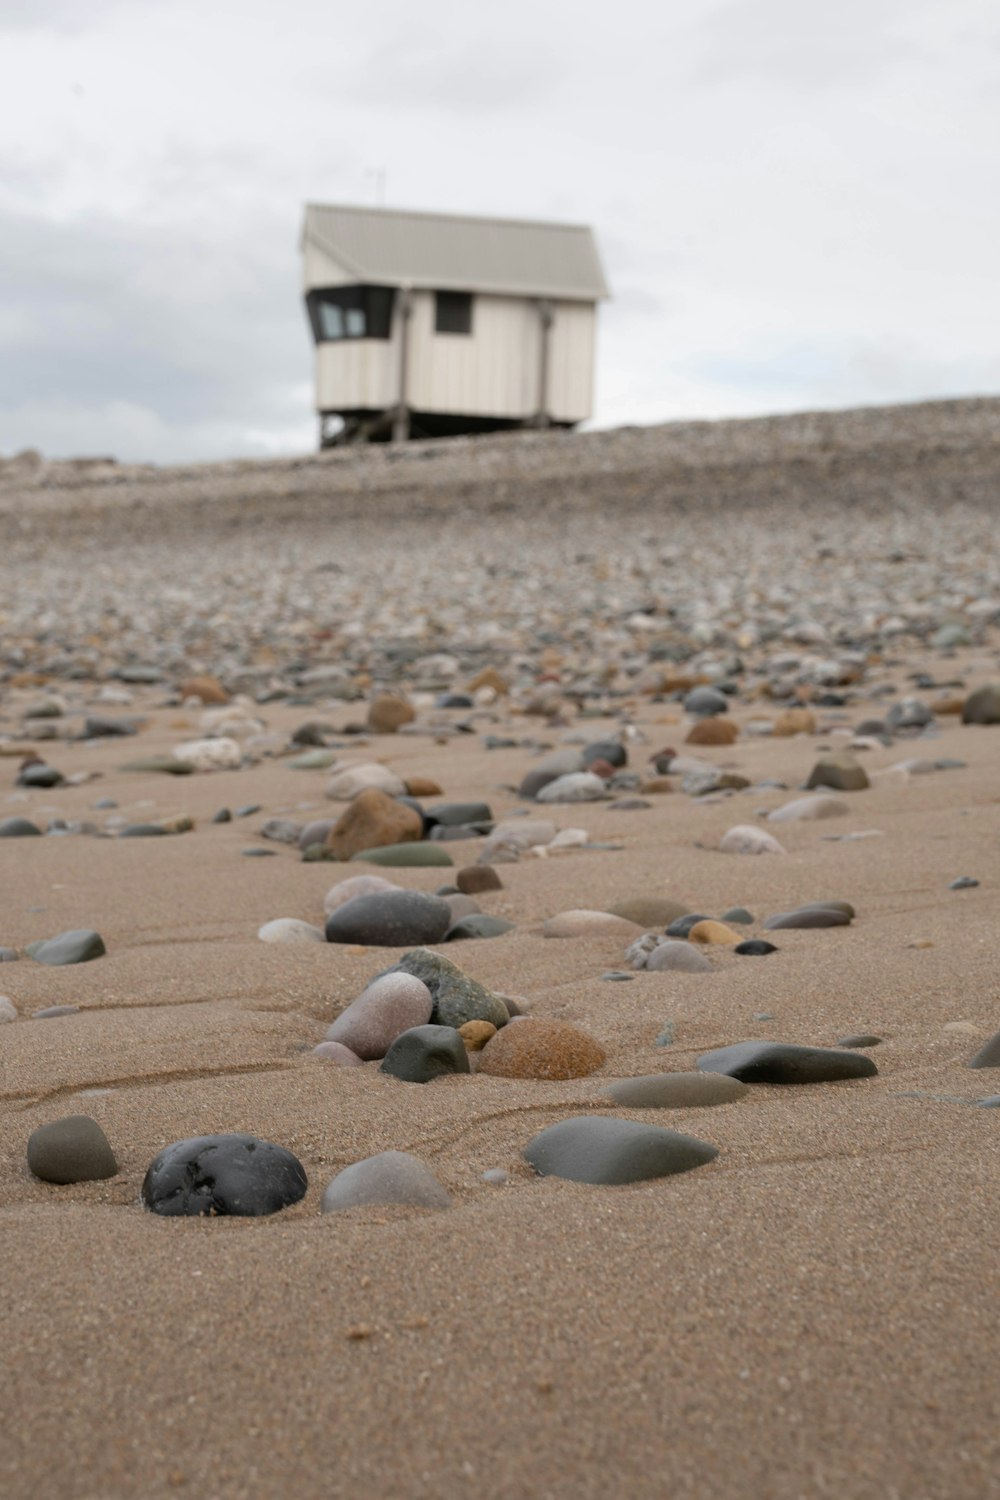 a house sitting on top of a sandy beach